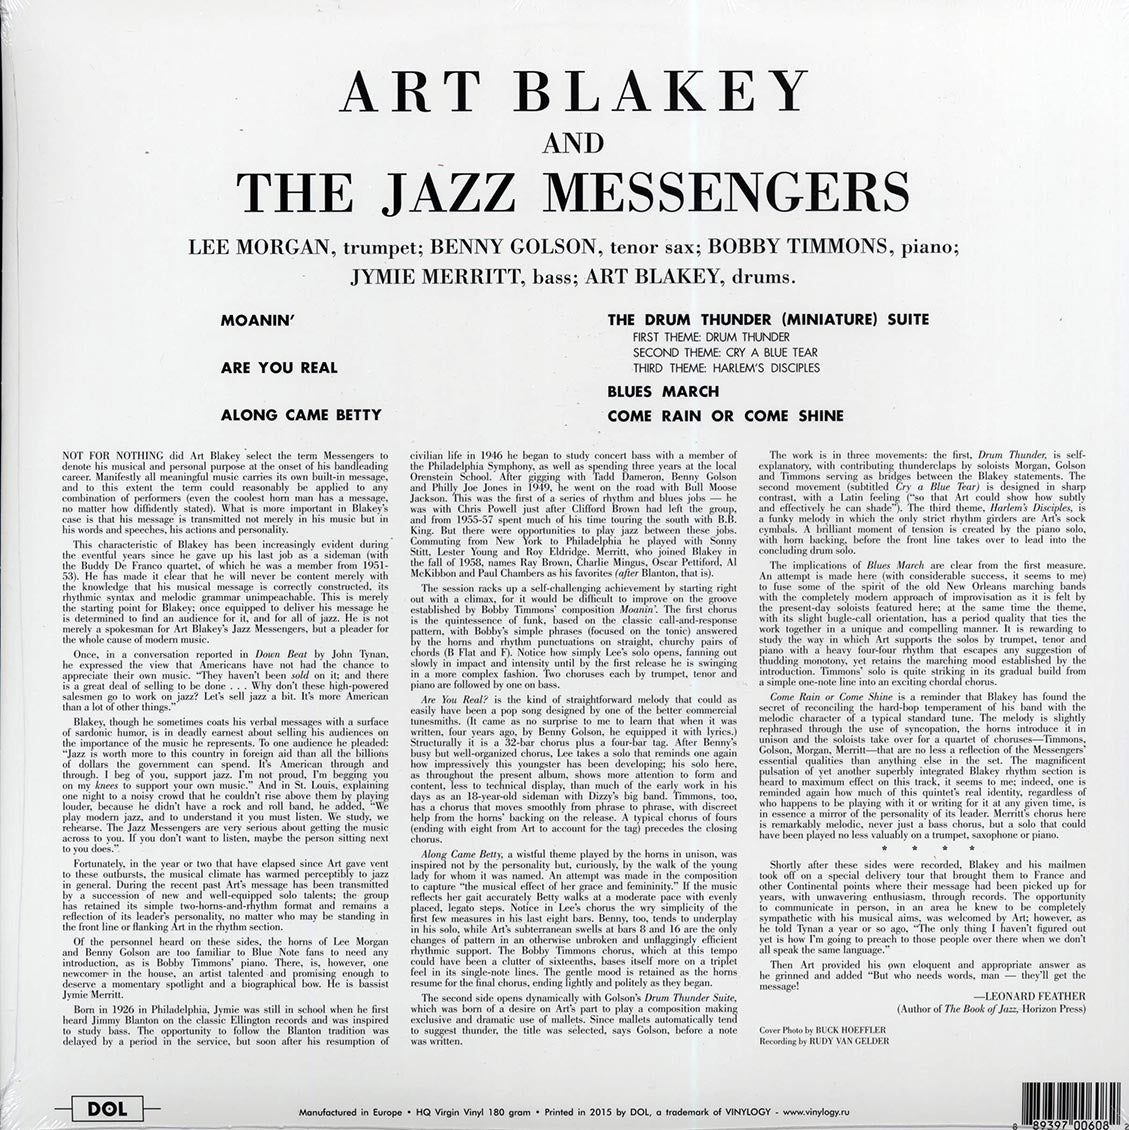 Art Blakey & The Jazz Messengers - Art Blakey & The Jazz Messengers (180g) (blue vinyl) - Vinyl LP, LP